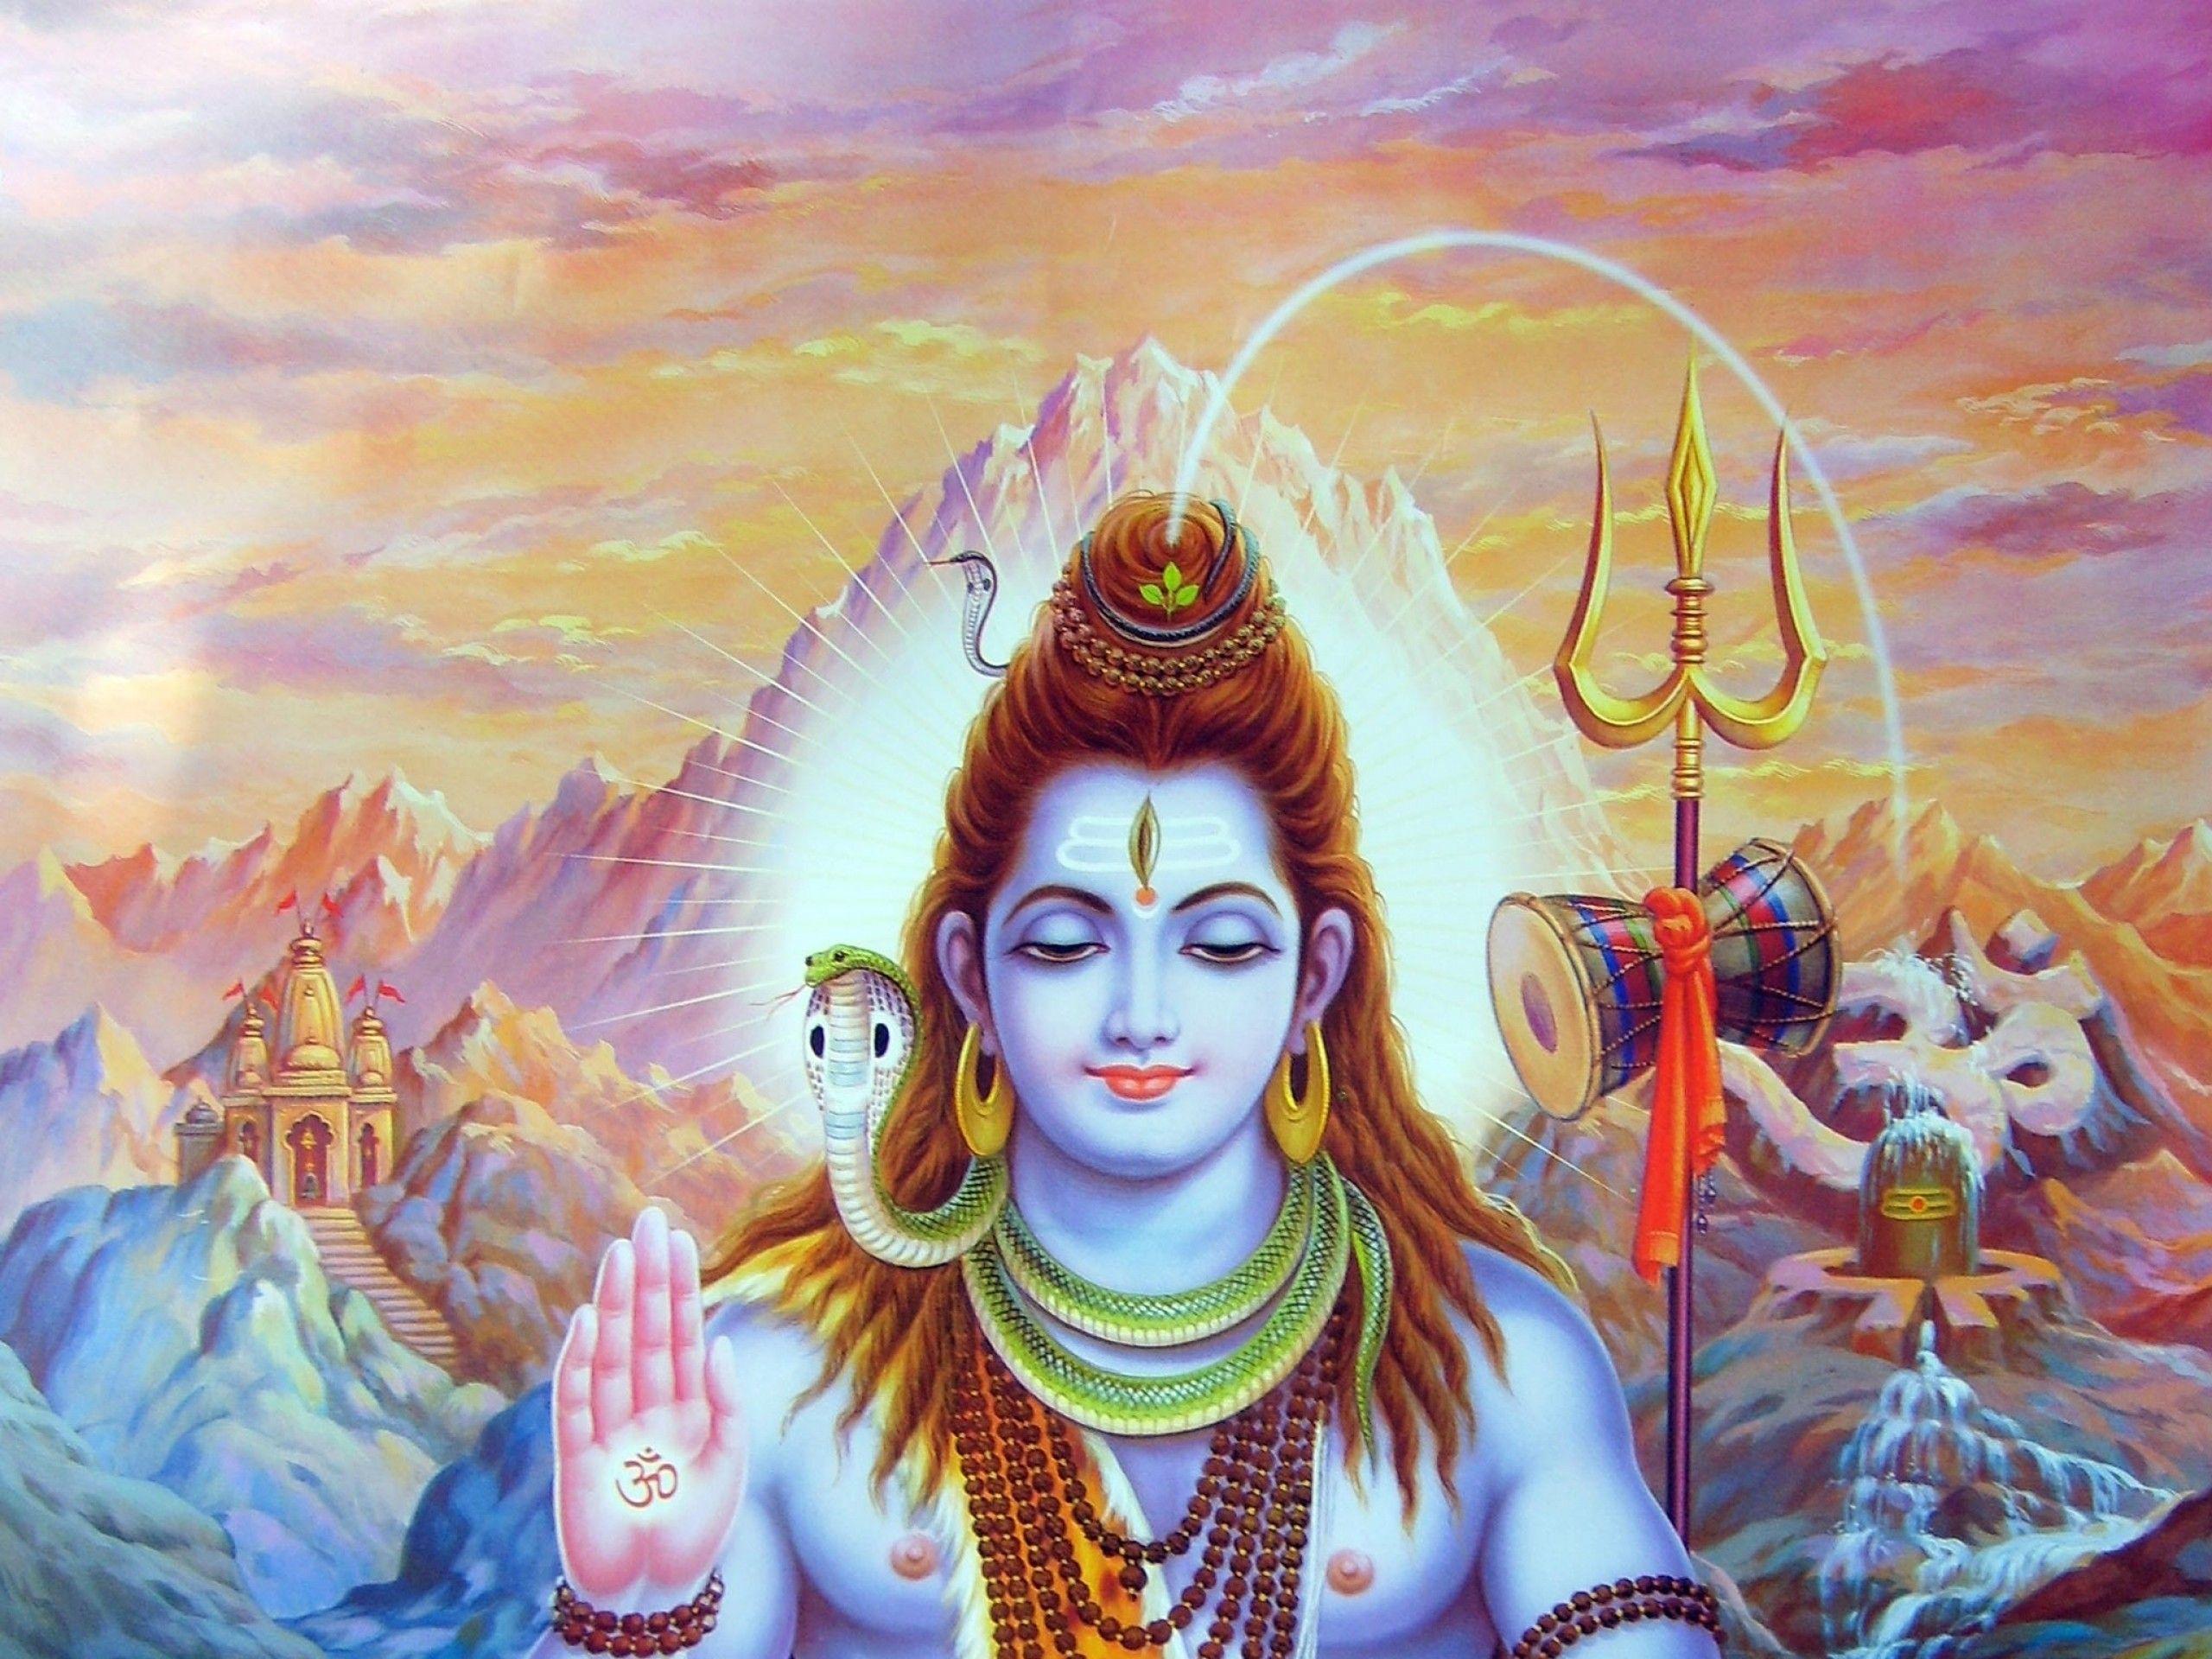 Maha Shivaratri Image, Lord Shiva Wallpaper for Shivaratri Festival